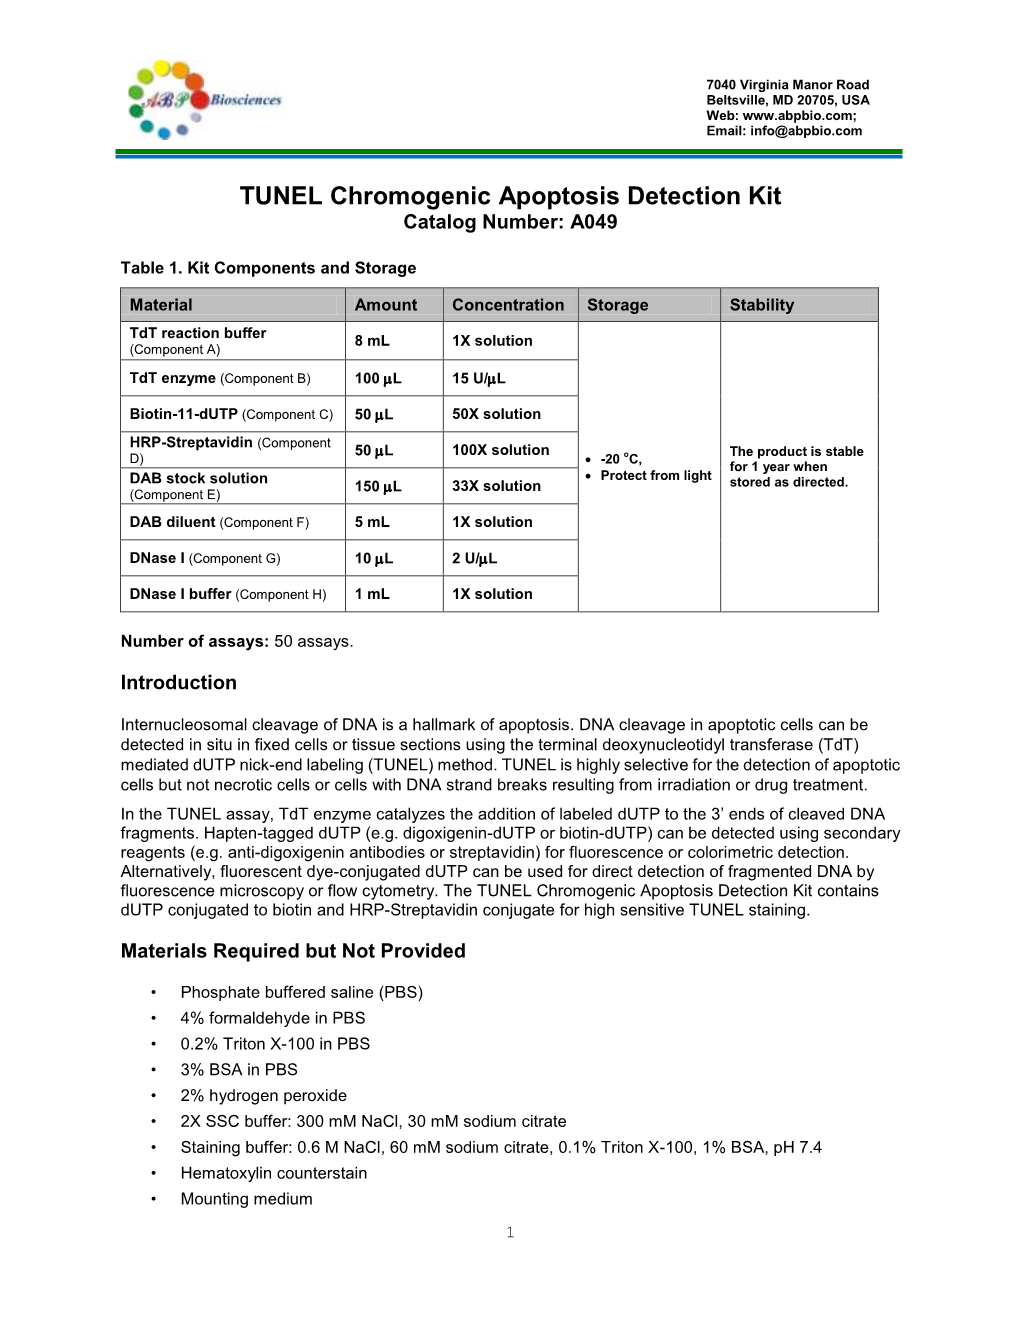 TUNEL Chromogenic Apoptosis Detection Kit Catalog Number: A049